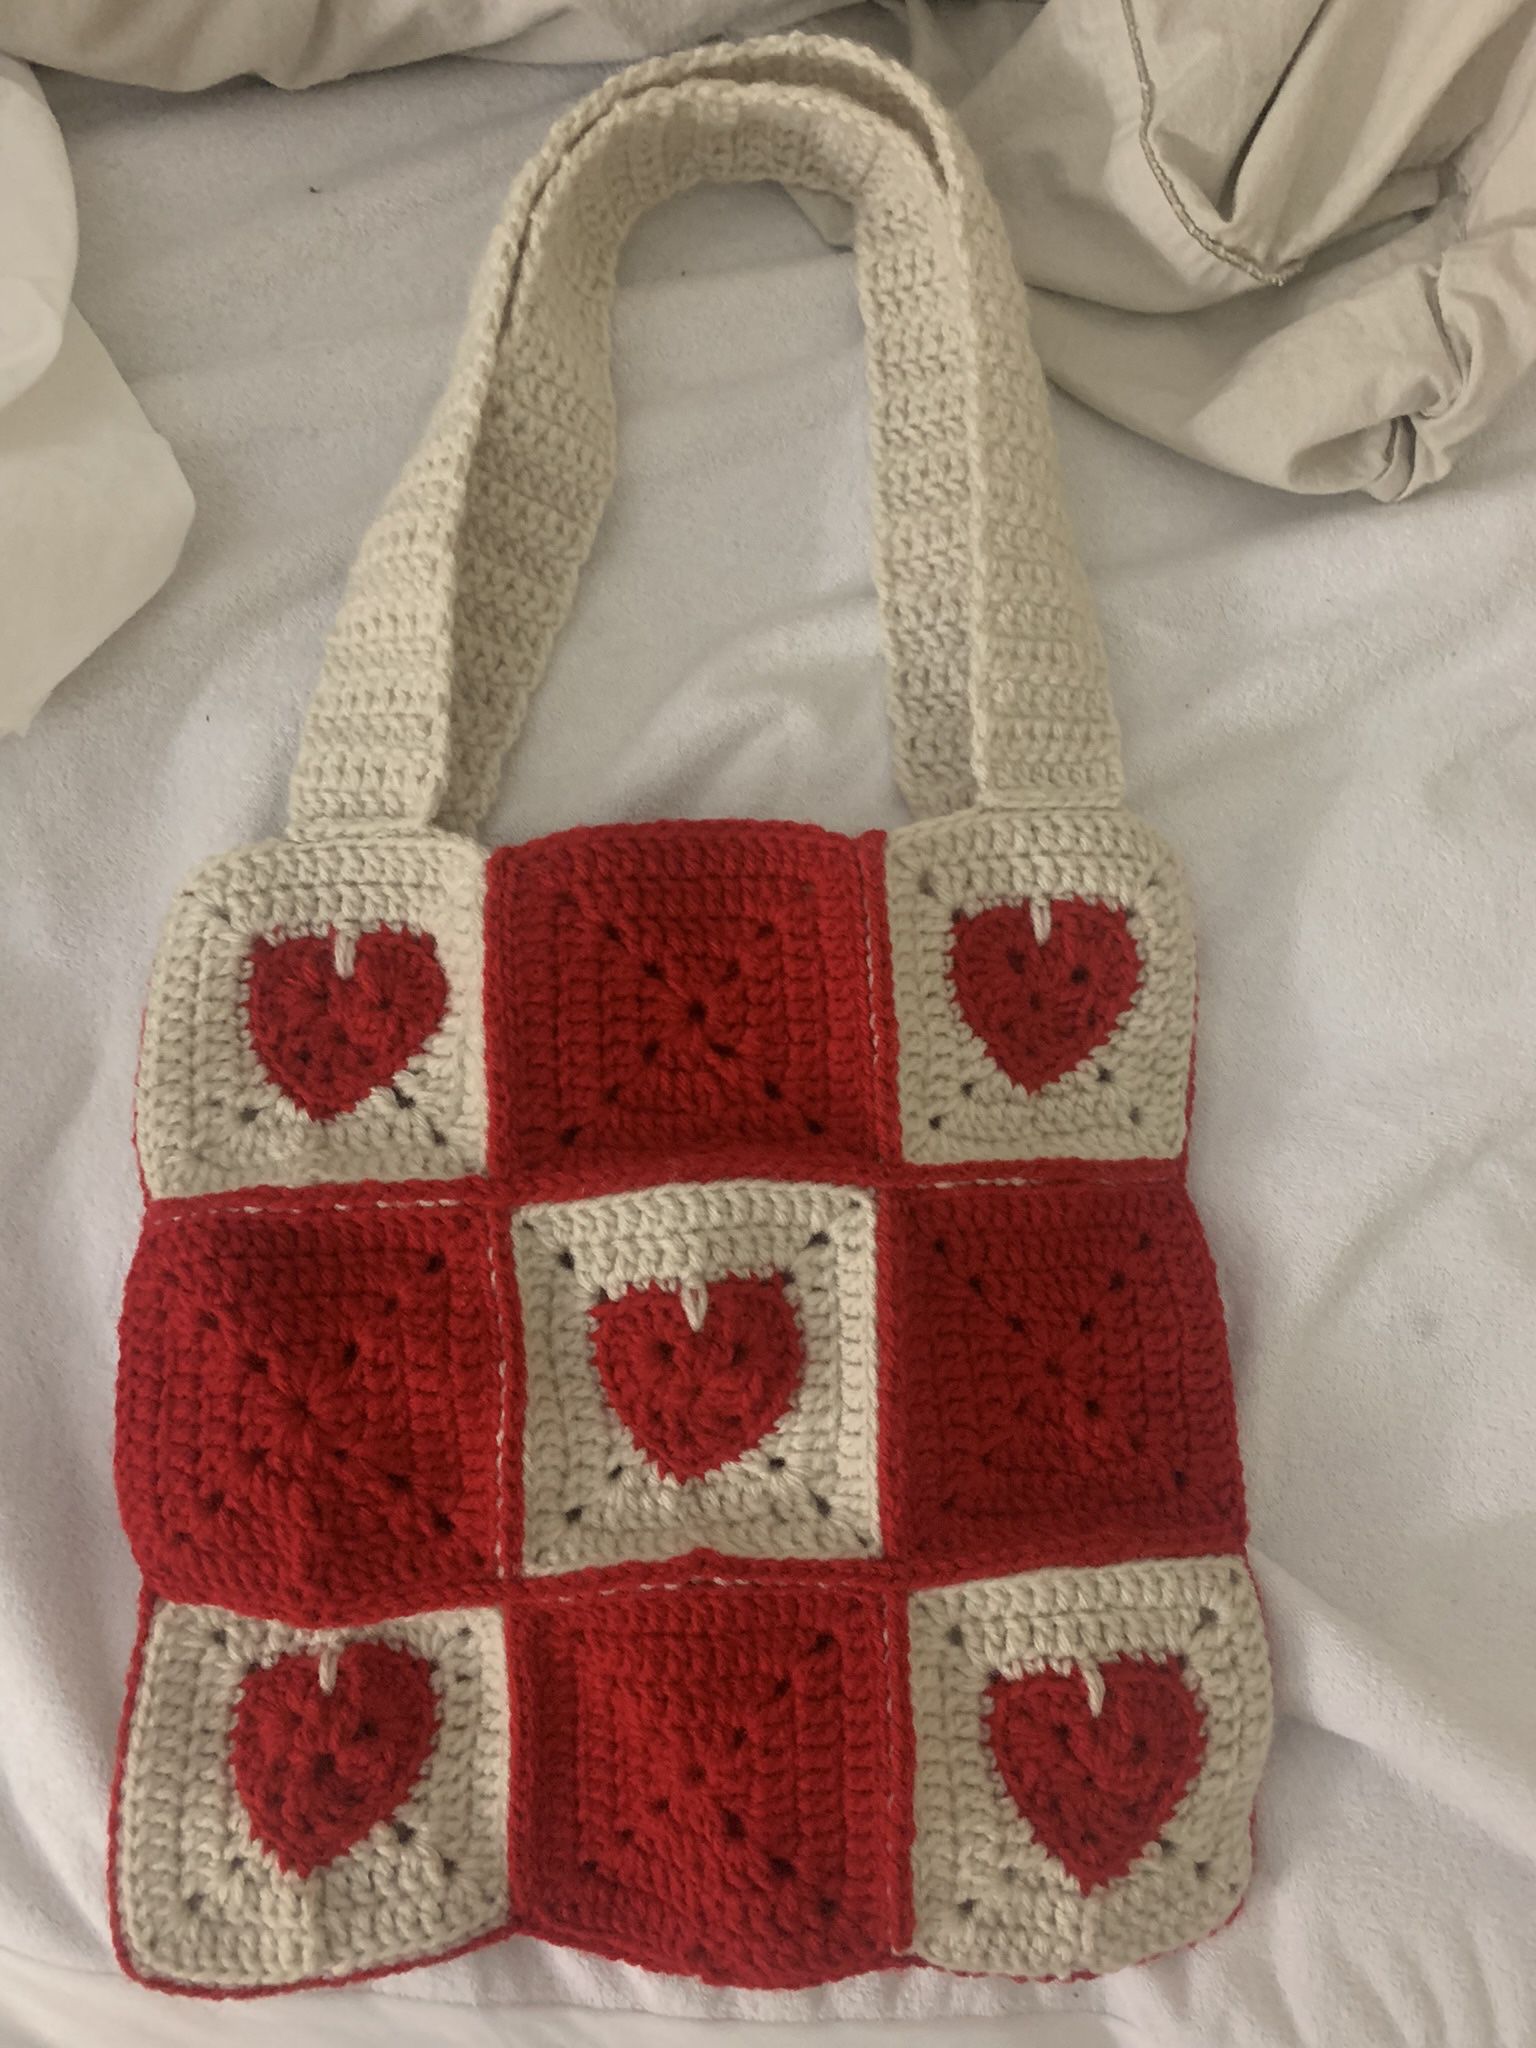 Hesrt crochet tote bag for Sale in Chula Vista, CA - OfferUp